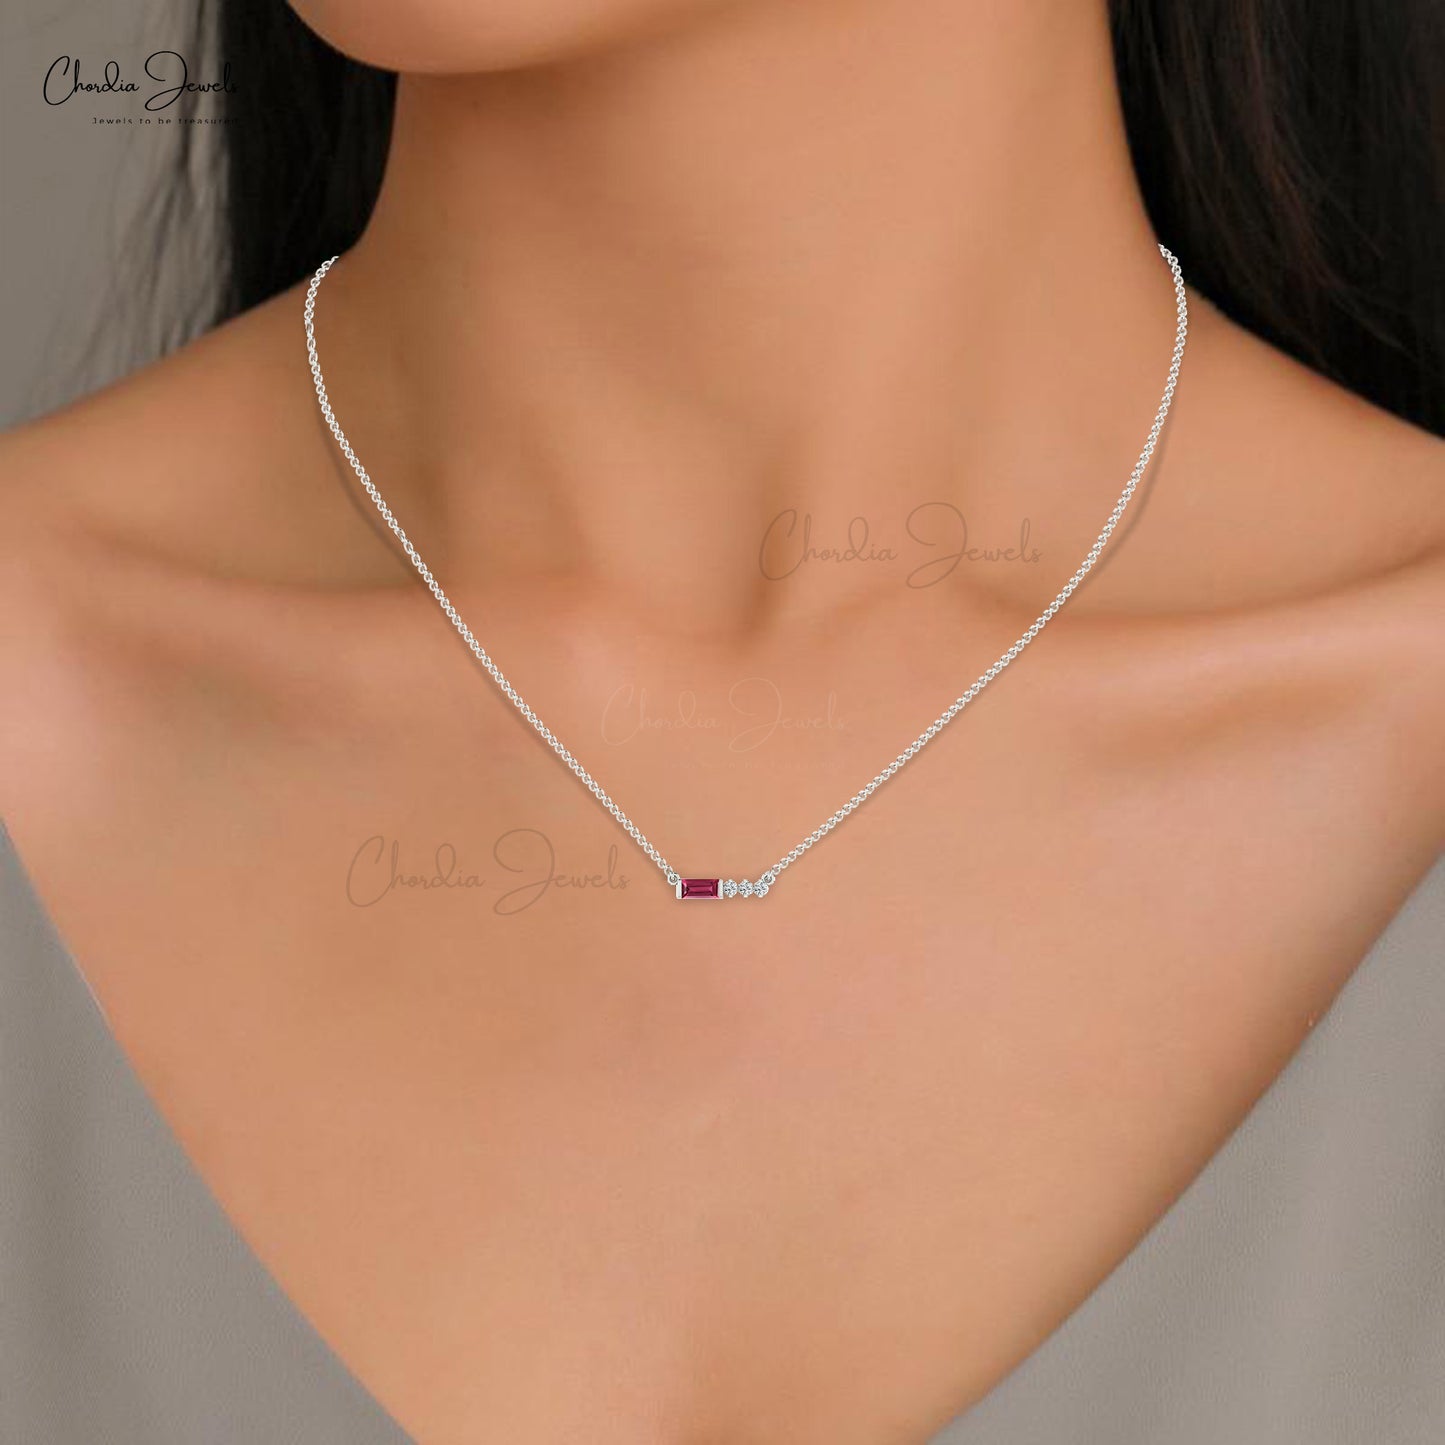 Fine Jewelry Bezel Set Pink Tourmaline & Round Diamond 14K Gold Necklace